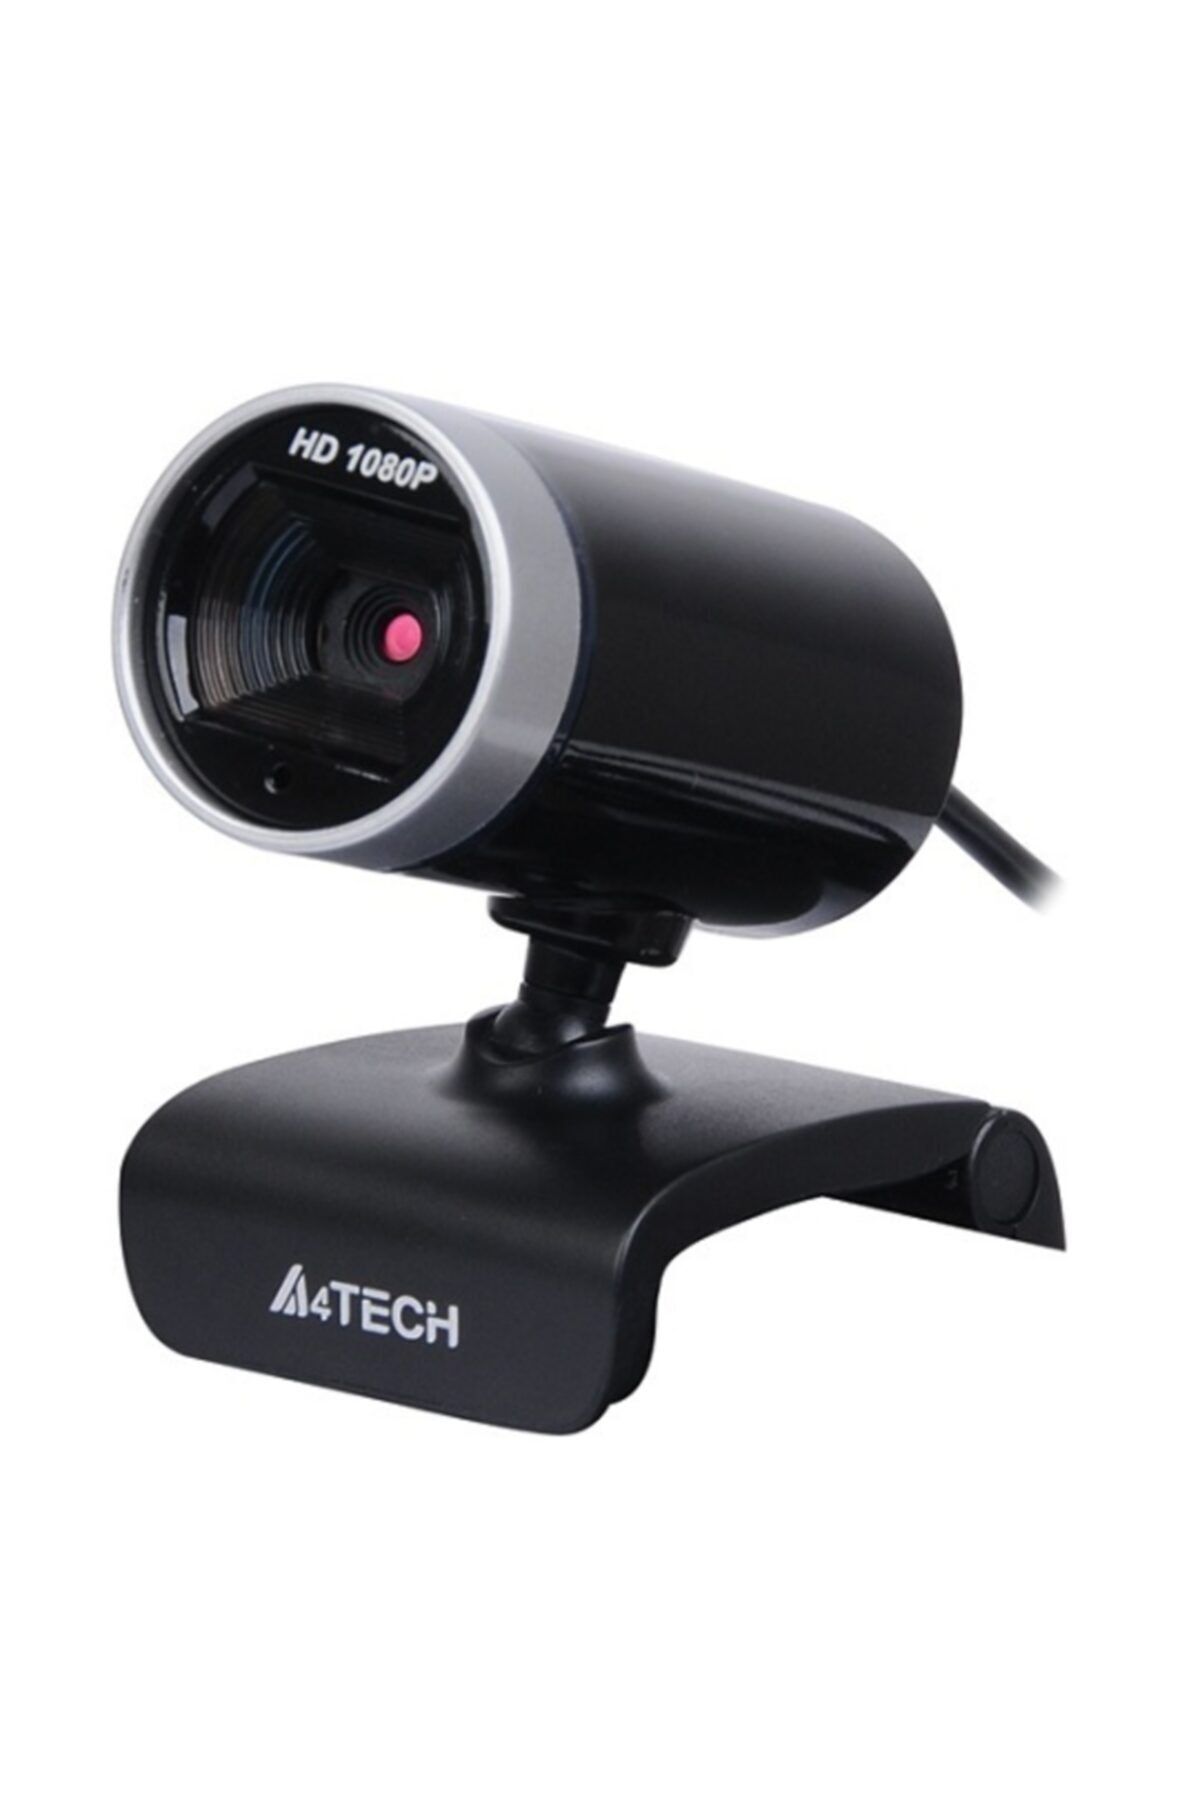 A4 Tech Pk-910h Webcam Full Hd 1080p 16mp